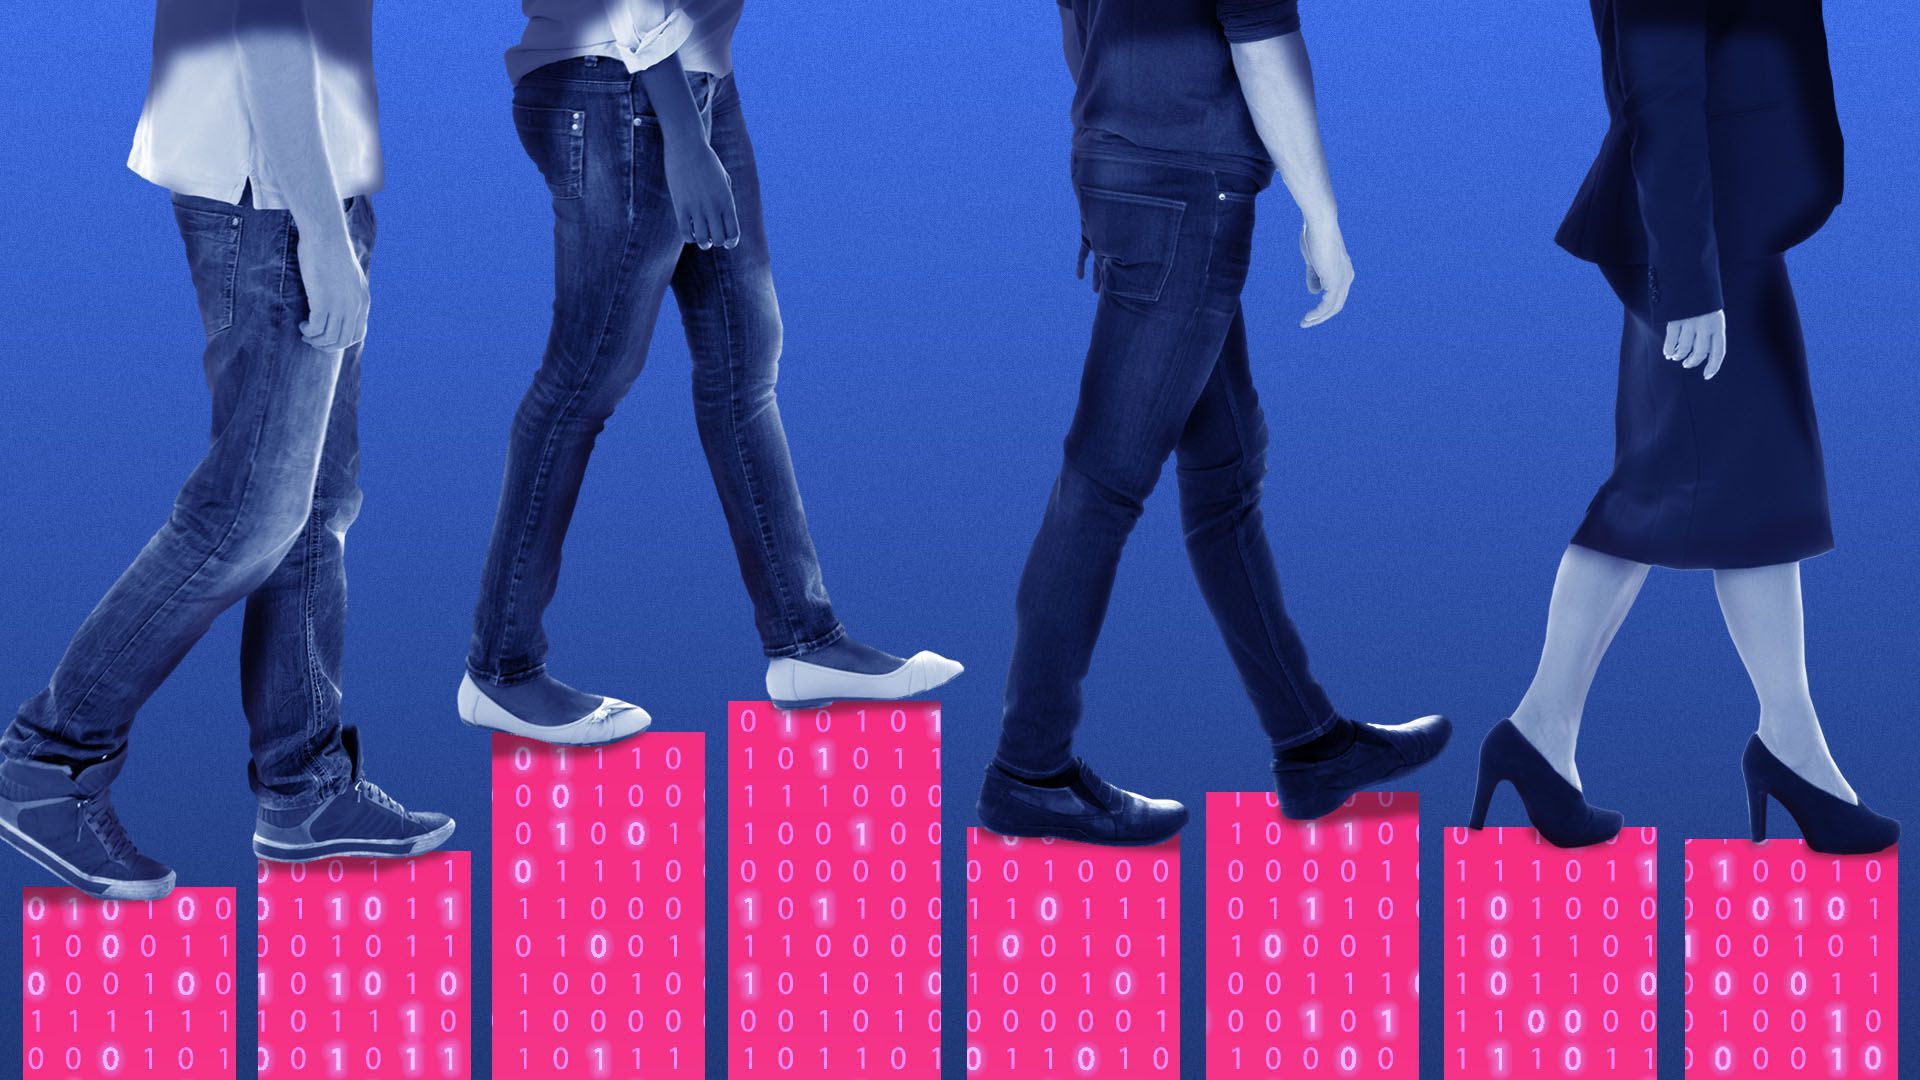 Illustration of people walking across steps that look like code